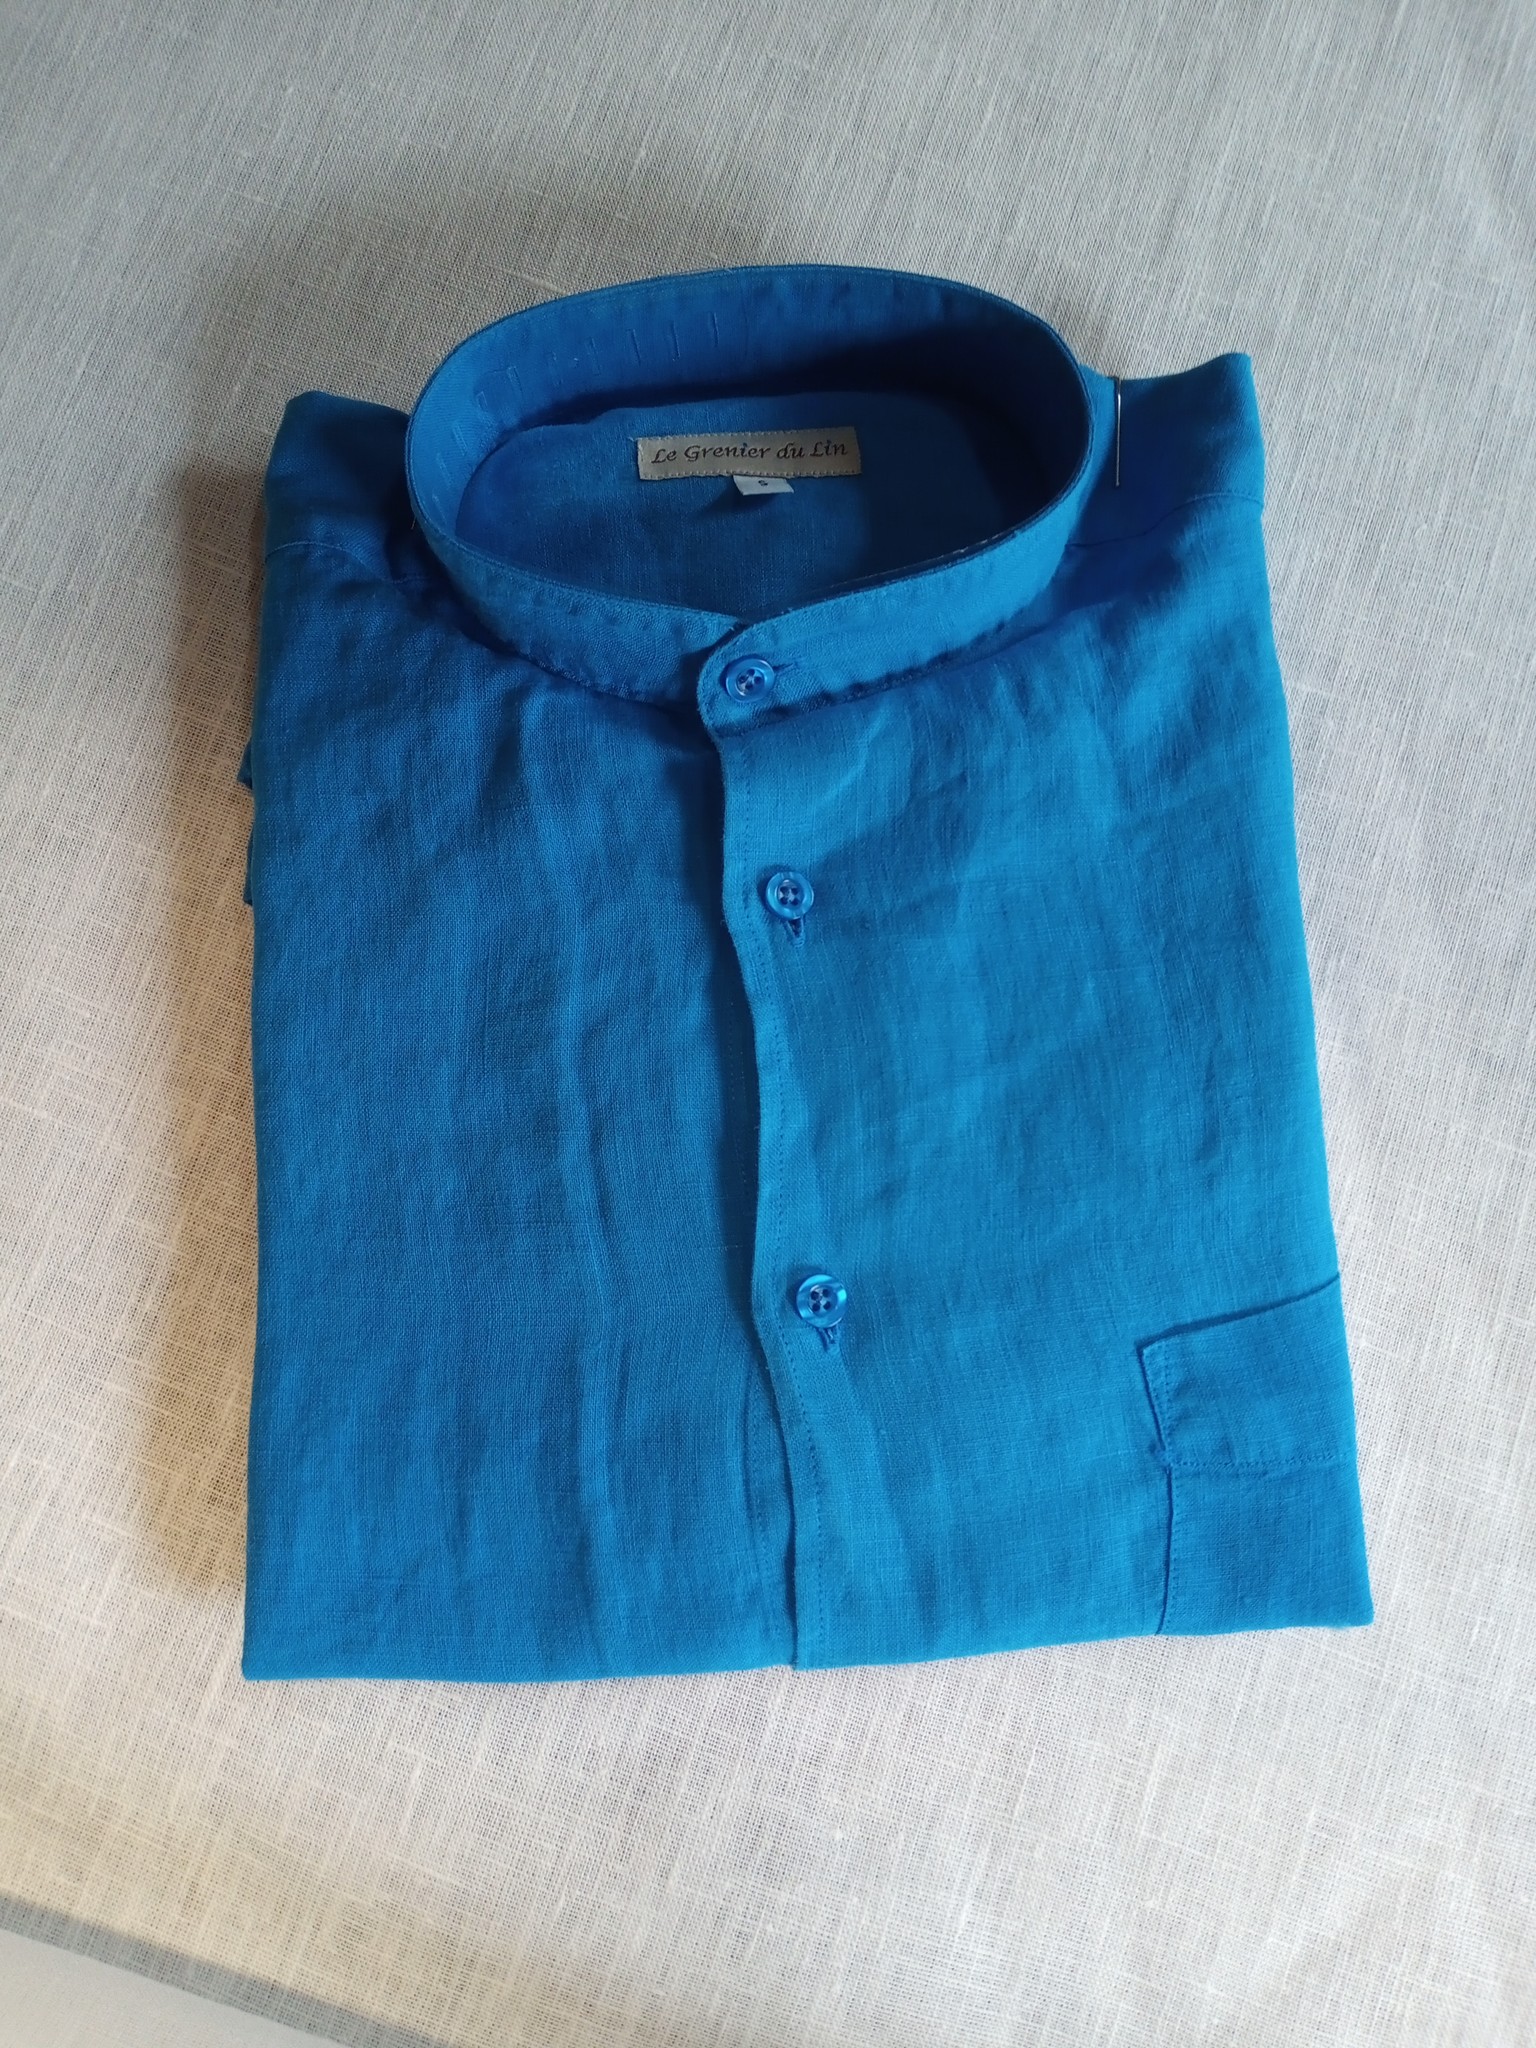 Le grenier du lin Linen shirt, long sleeves, officer collar, blue